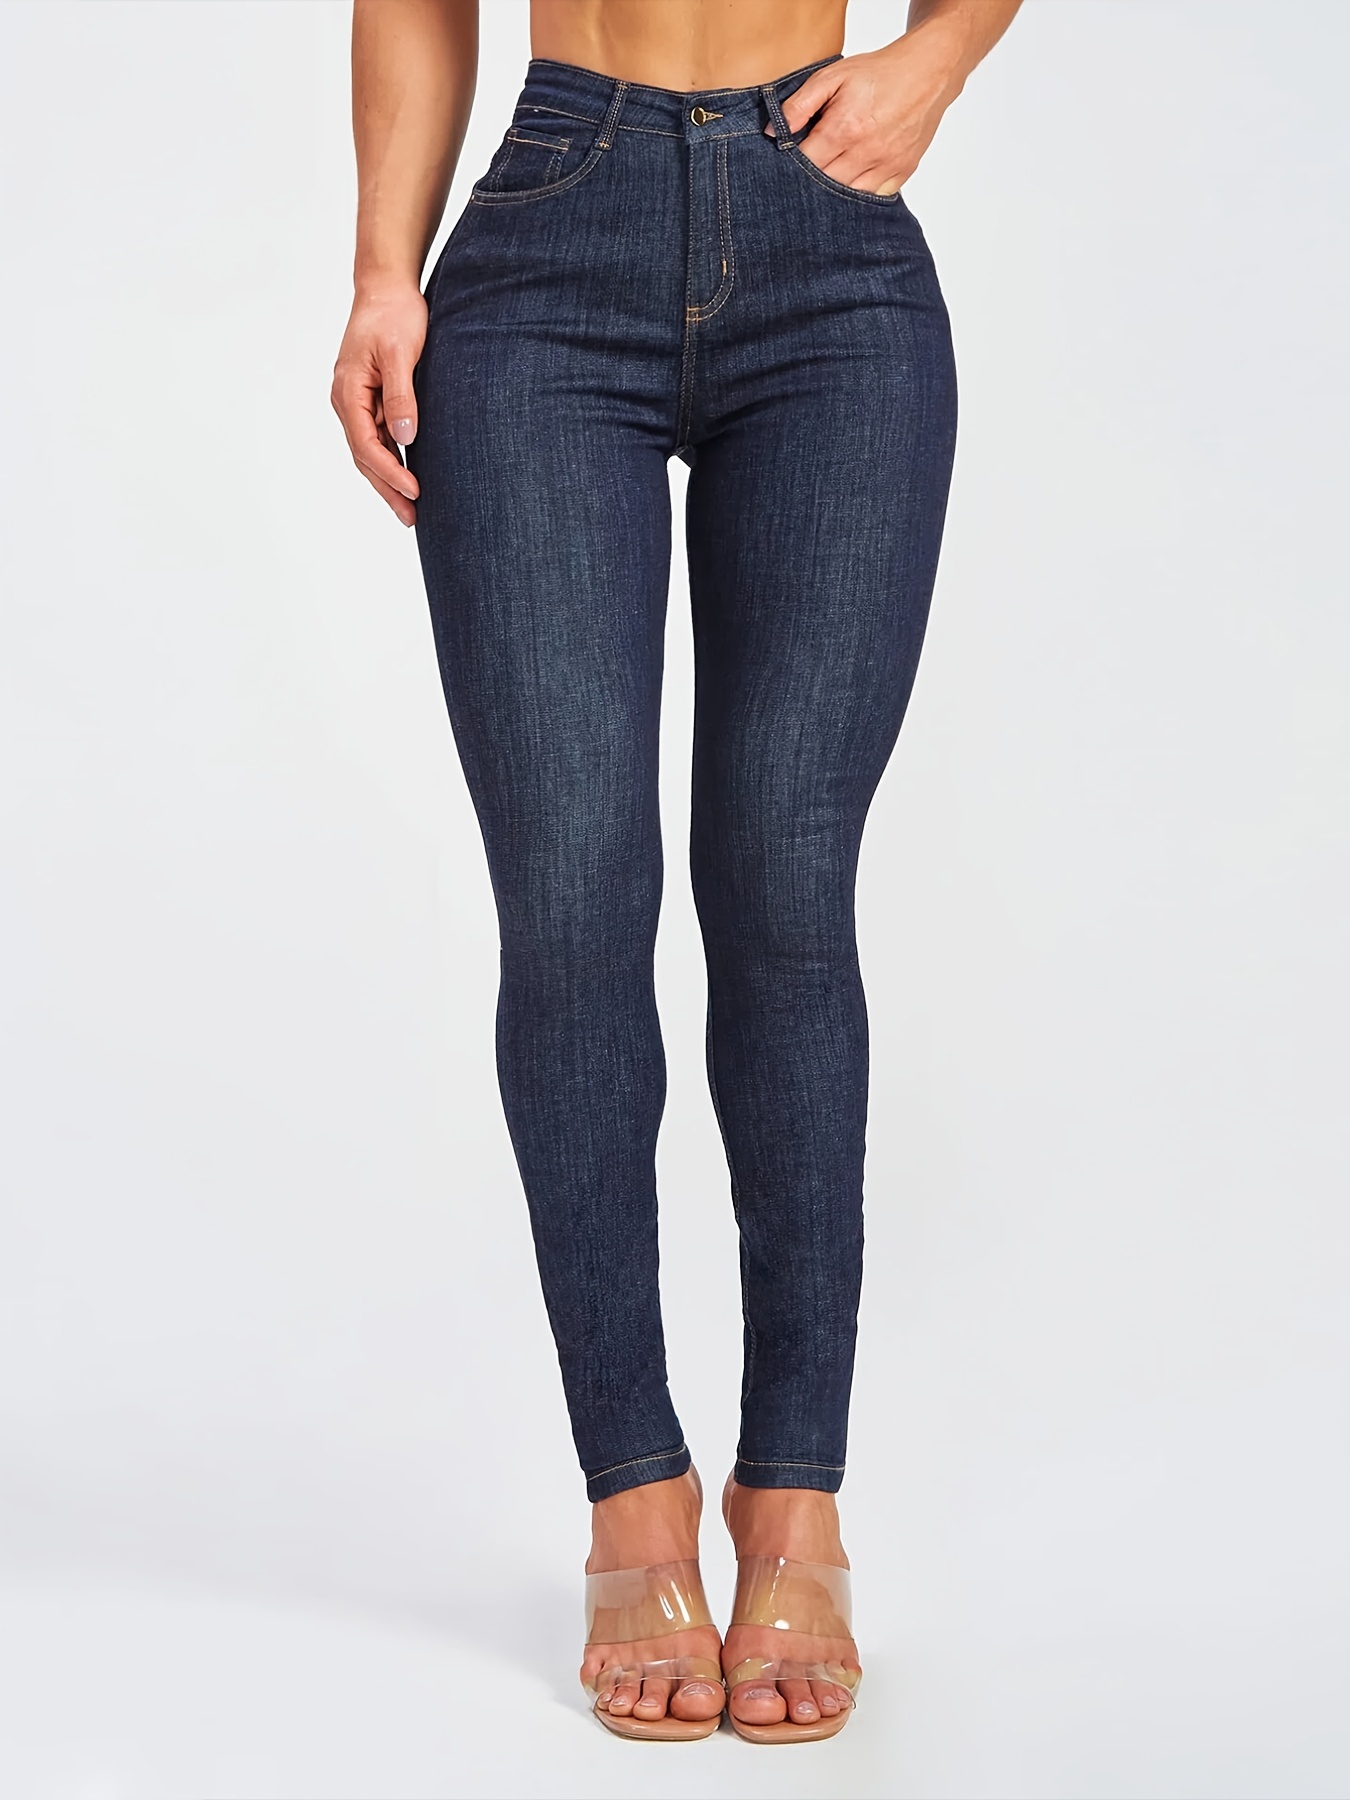 High Rise Curvy Plain Design Legs Dark Blue Skinny Jeans, High Waist  Stretchy Denim Pants, Women's Denim Jeans, Women's Clothing